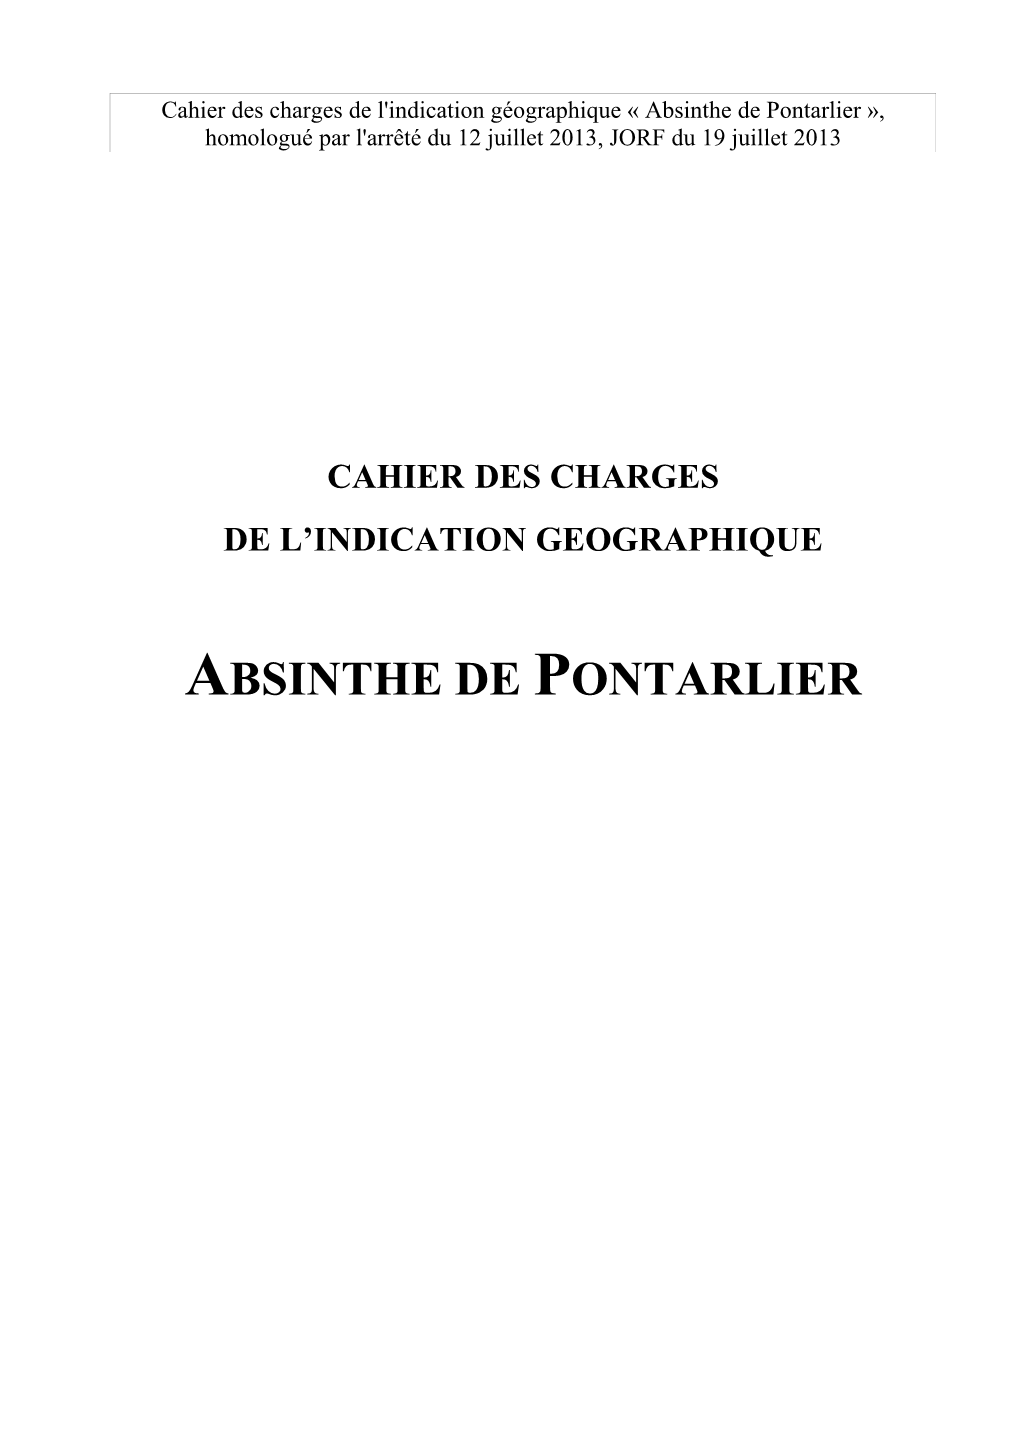 Association Des Distillateurs De Plantes D'absinthe De Pontarlier